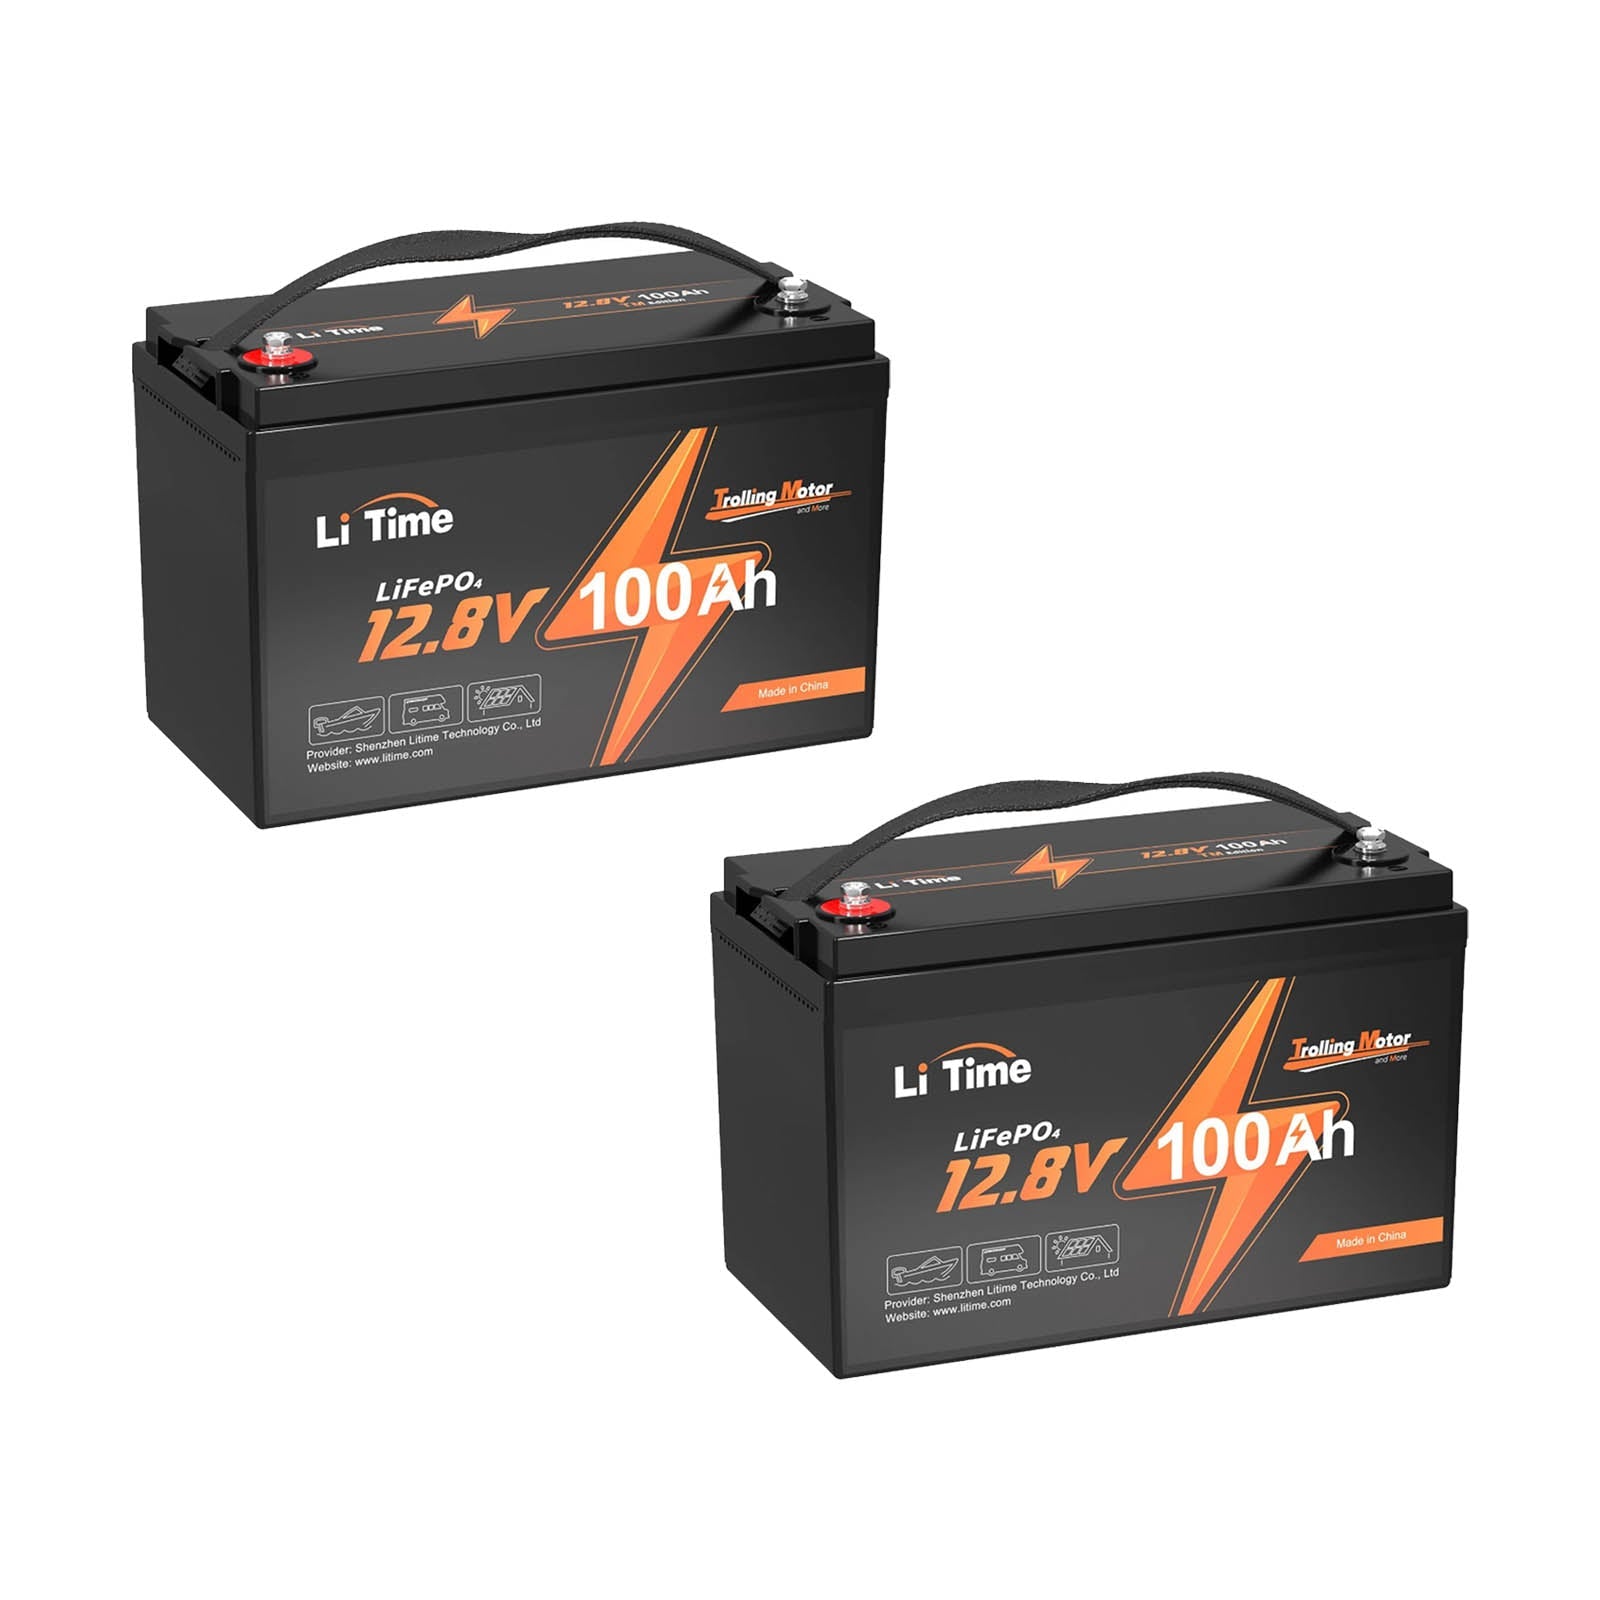 LiTime 12V 100Ah 専门タイプ  LiFePO4 バッテリー トローリングモーターにもっと適する LiTime-JP